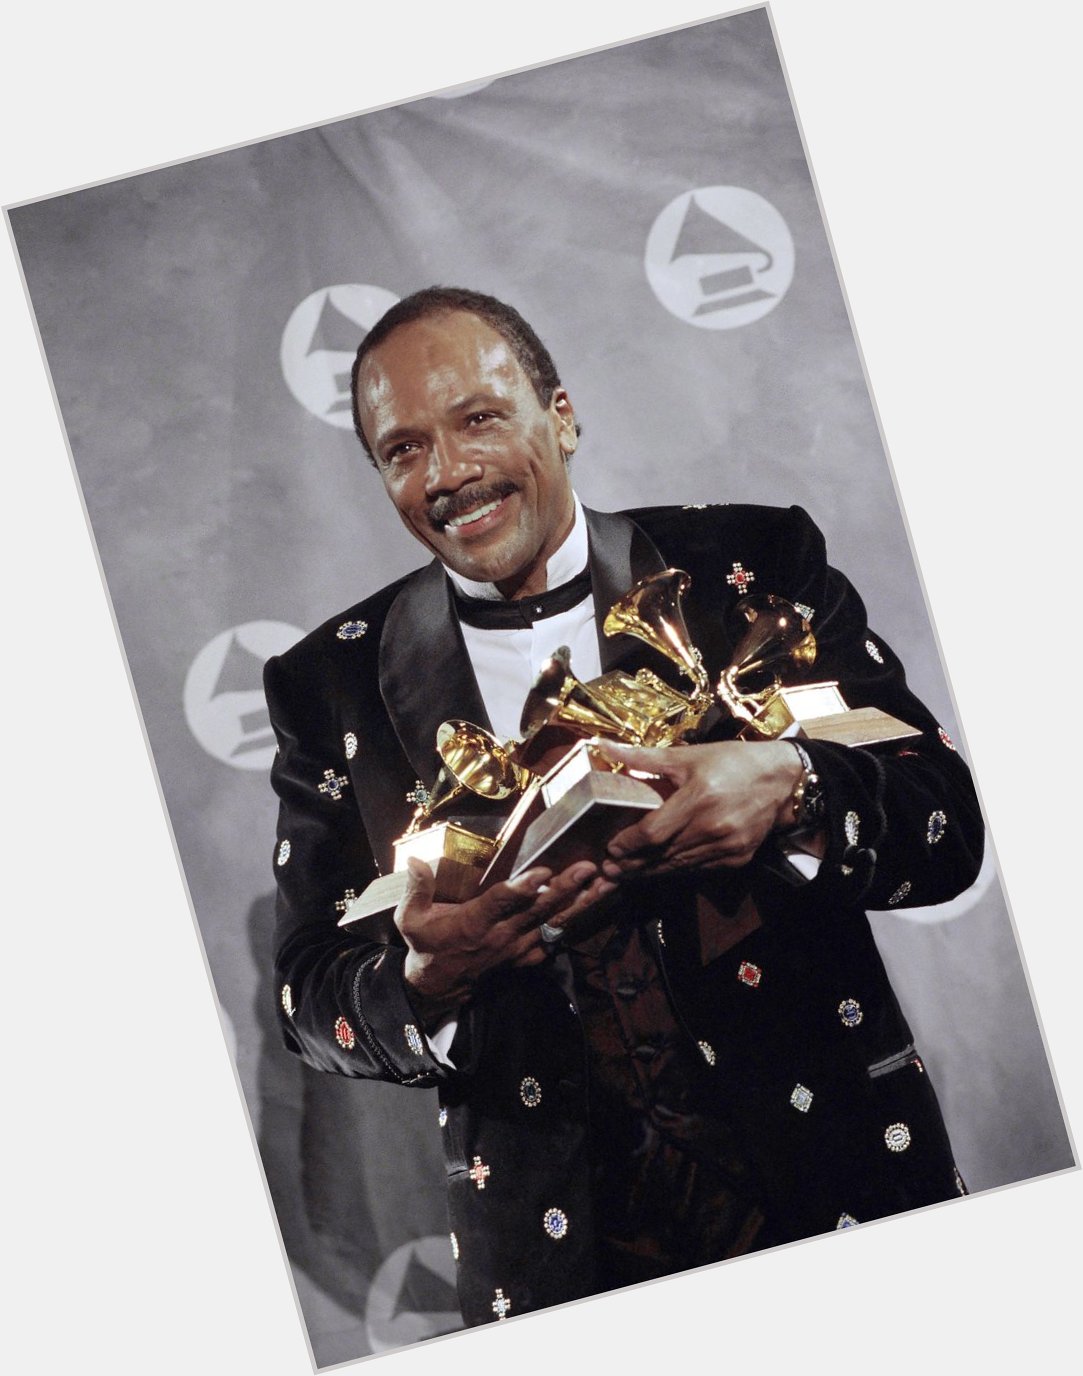 Happy Birthday to Quincy Jones, who turns 84 today! 